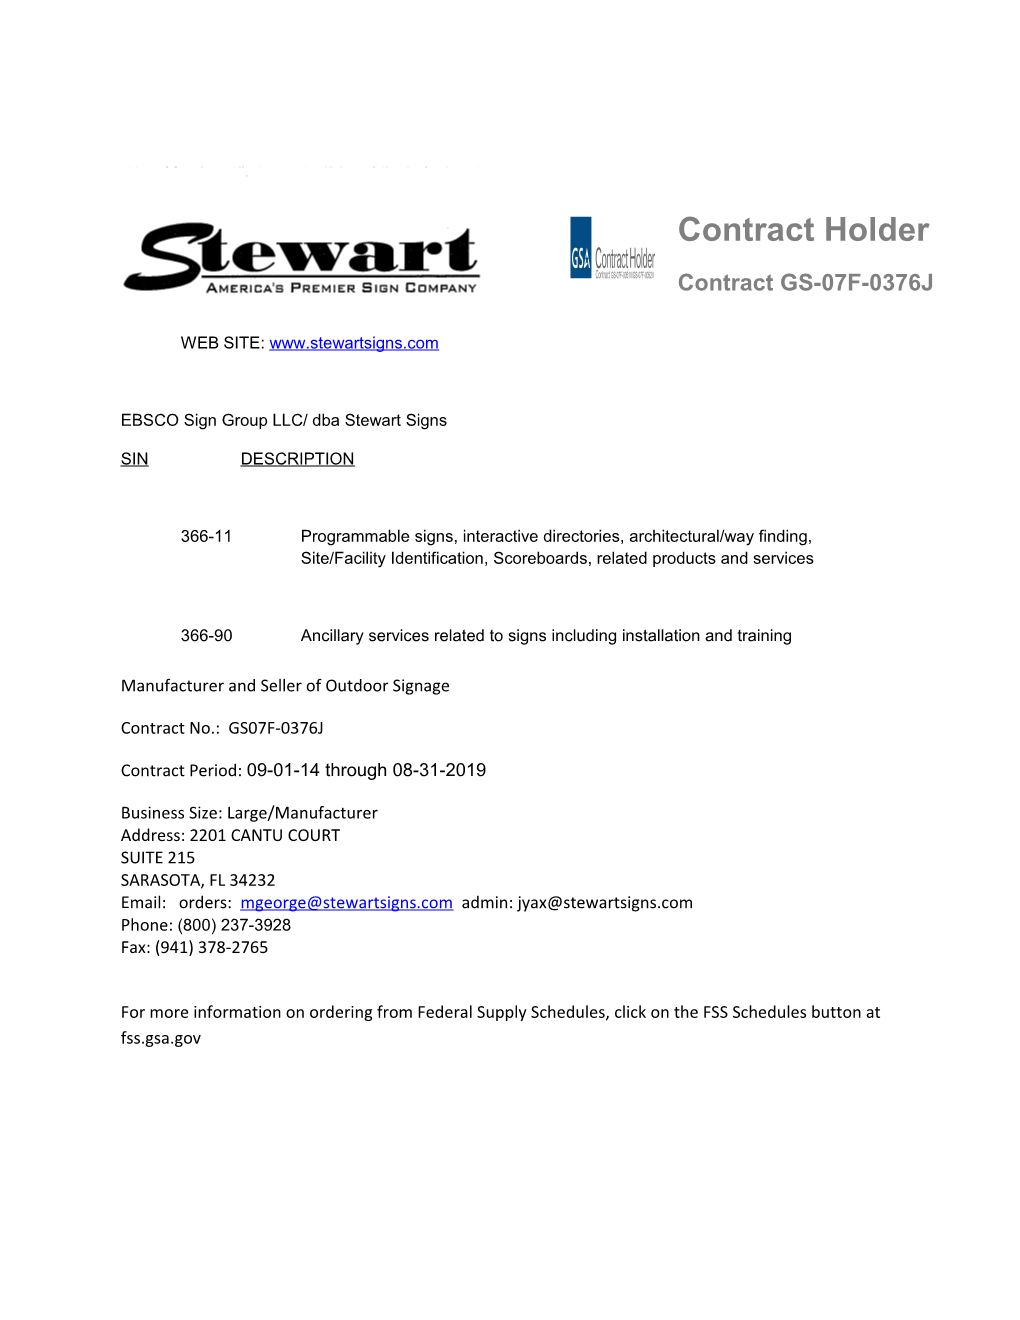 EBSCO Sign Group LLC/ Dba Stewart Signs